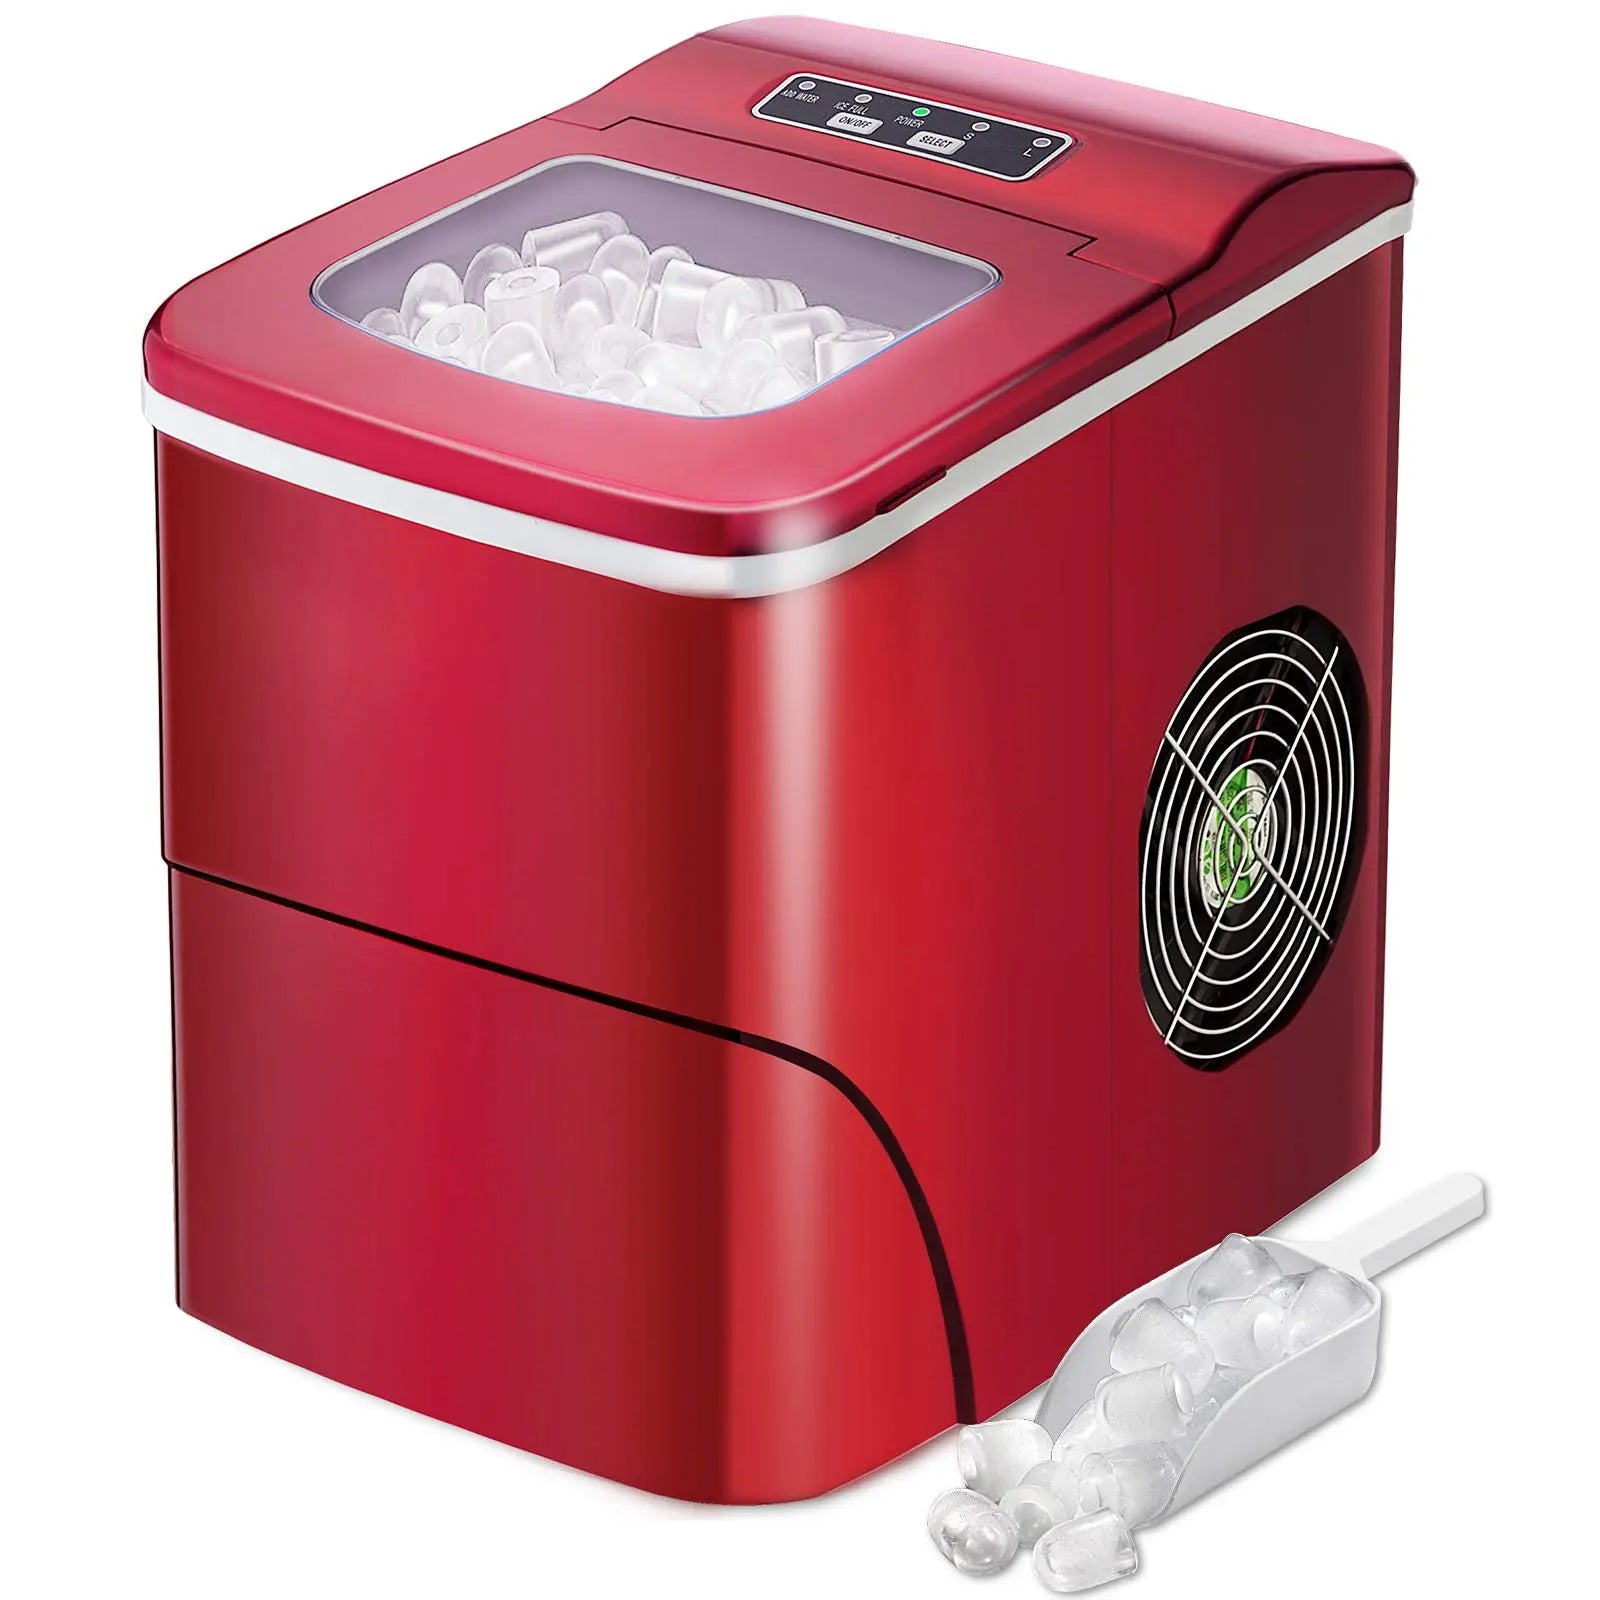 Countertop Ice Maker Machine, Portable Ice Makers Countertop, Make